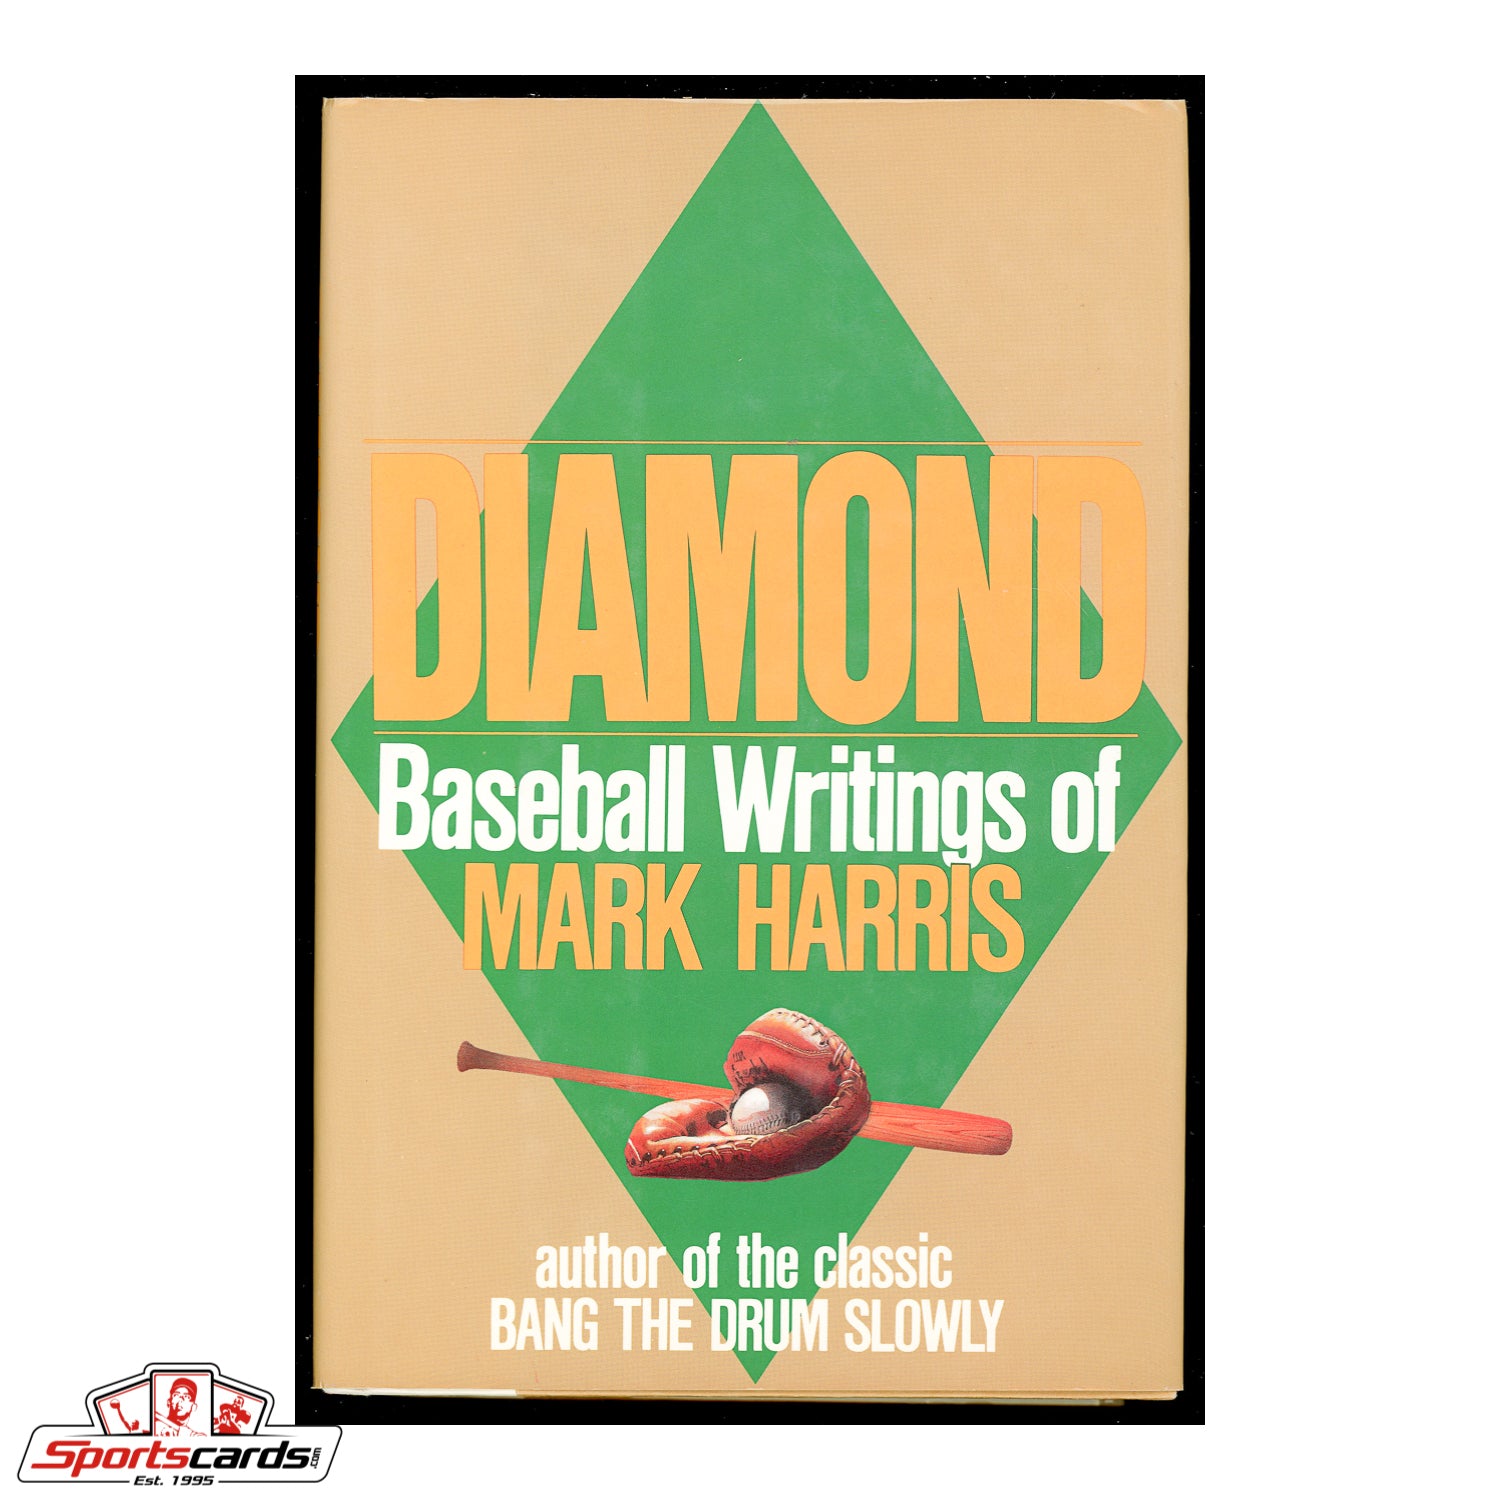 Diamond: Baseball Writings of Mark Harris 1st Edition Hardcover Book with Dust Jacket